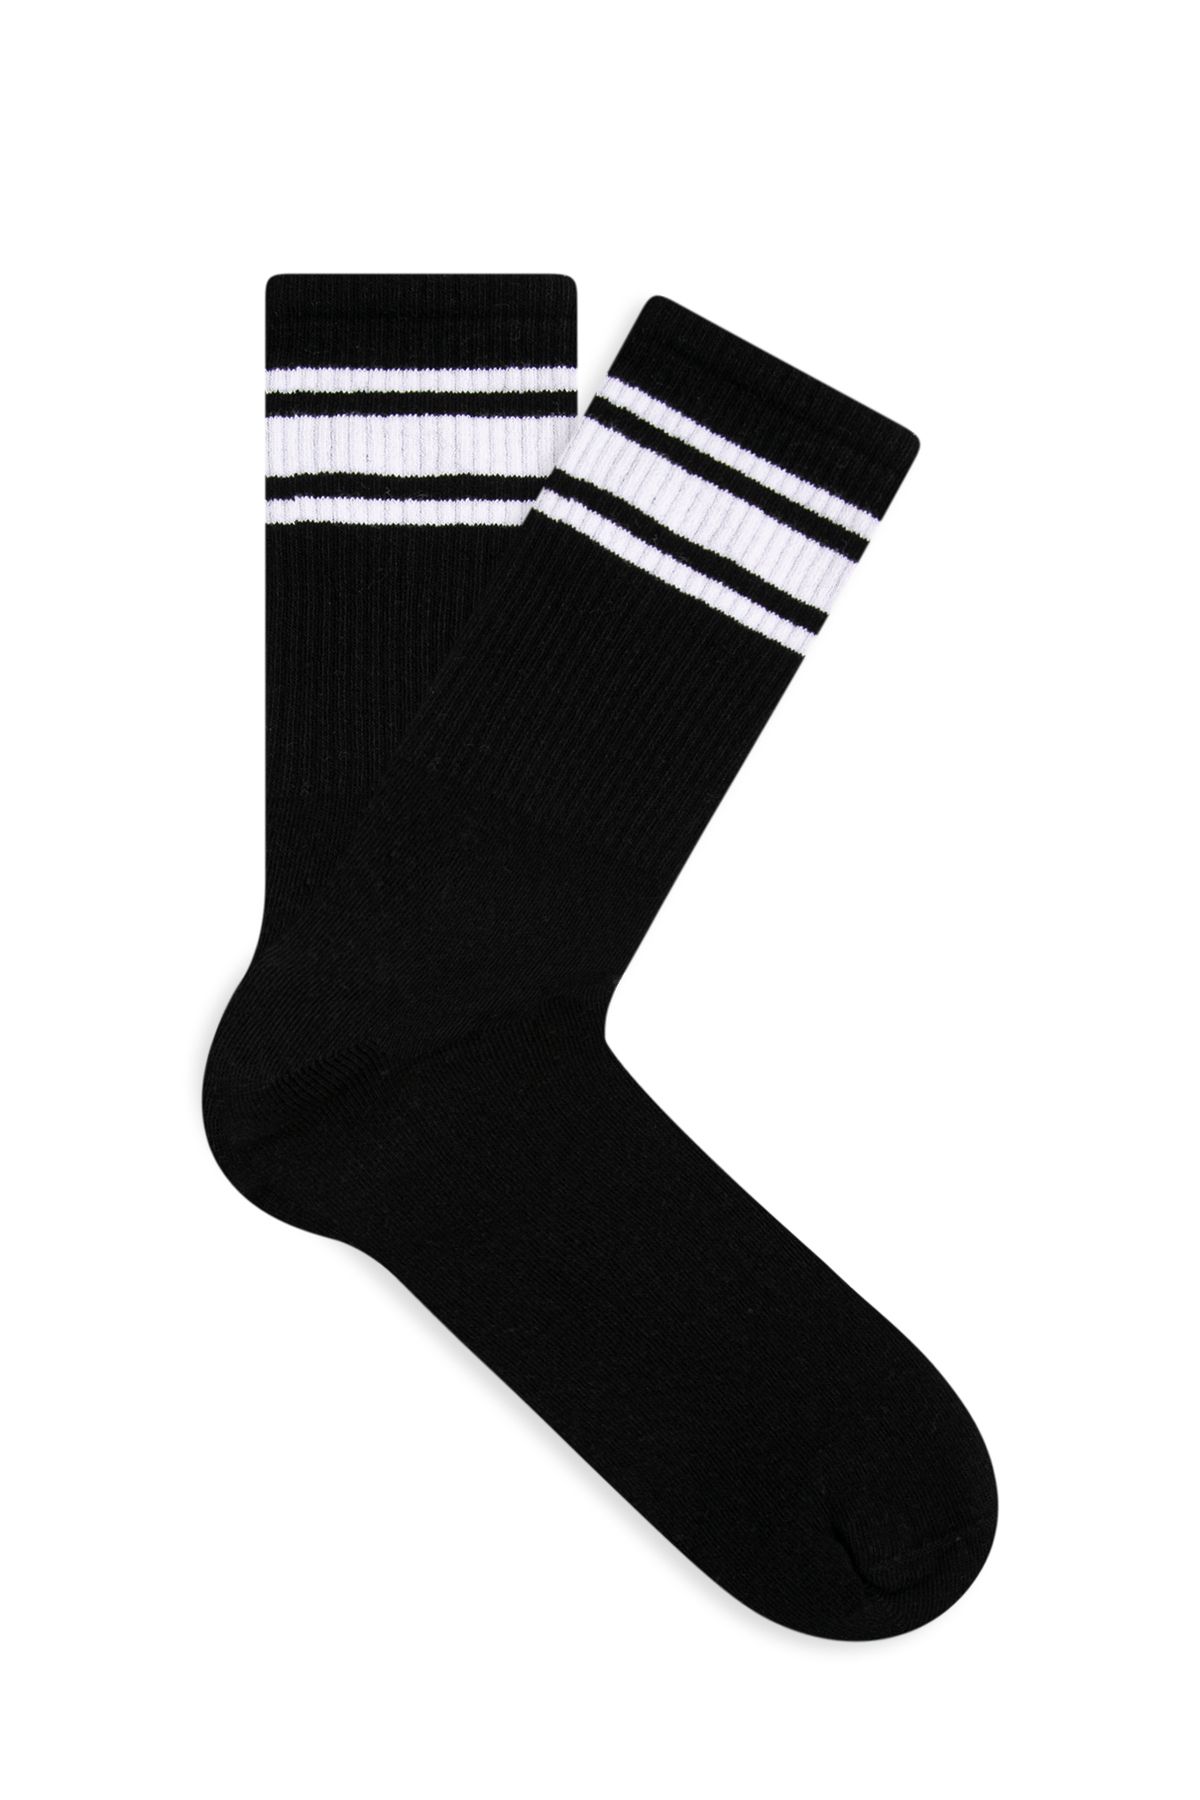 Mavi Siyah Soket Çorap 0911089-900